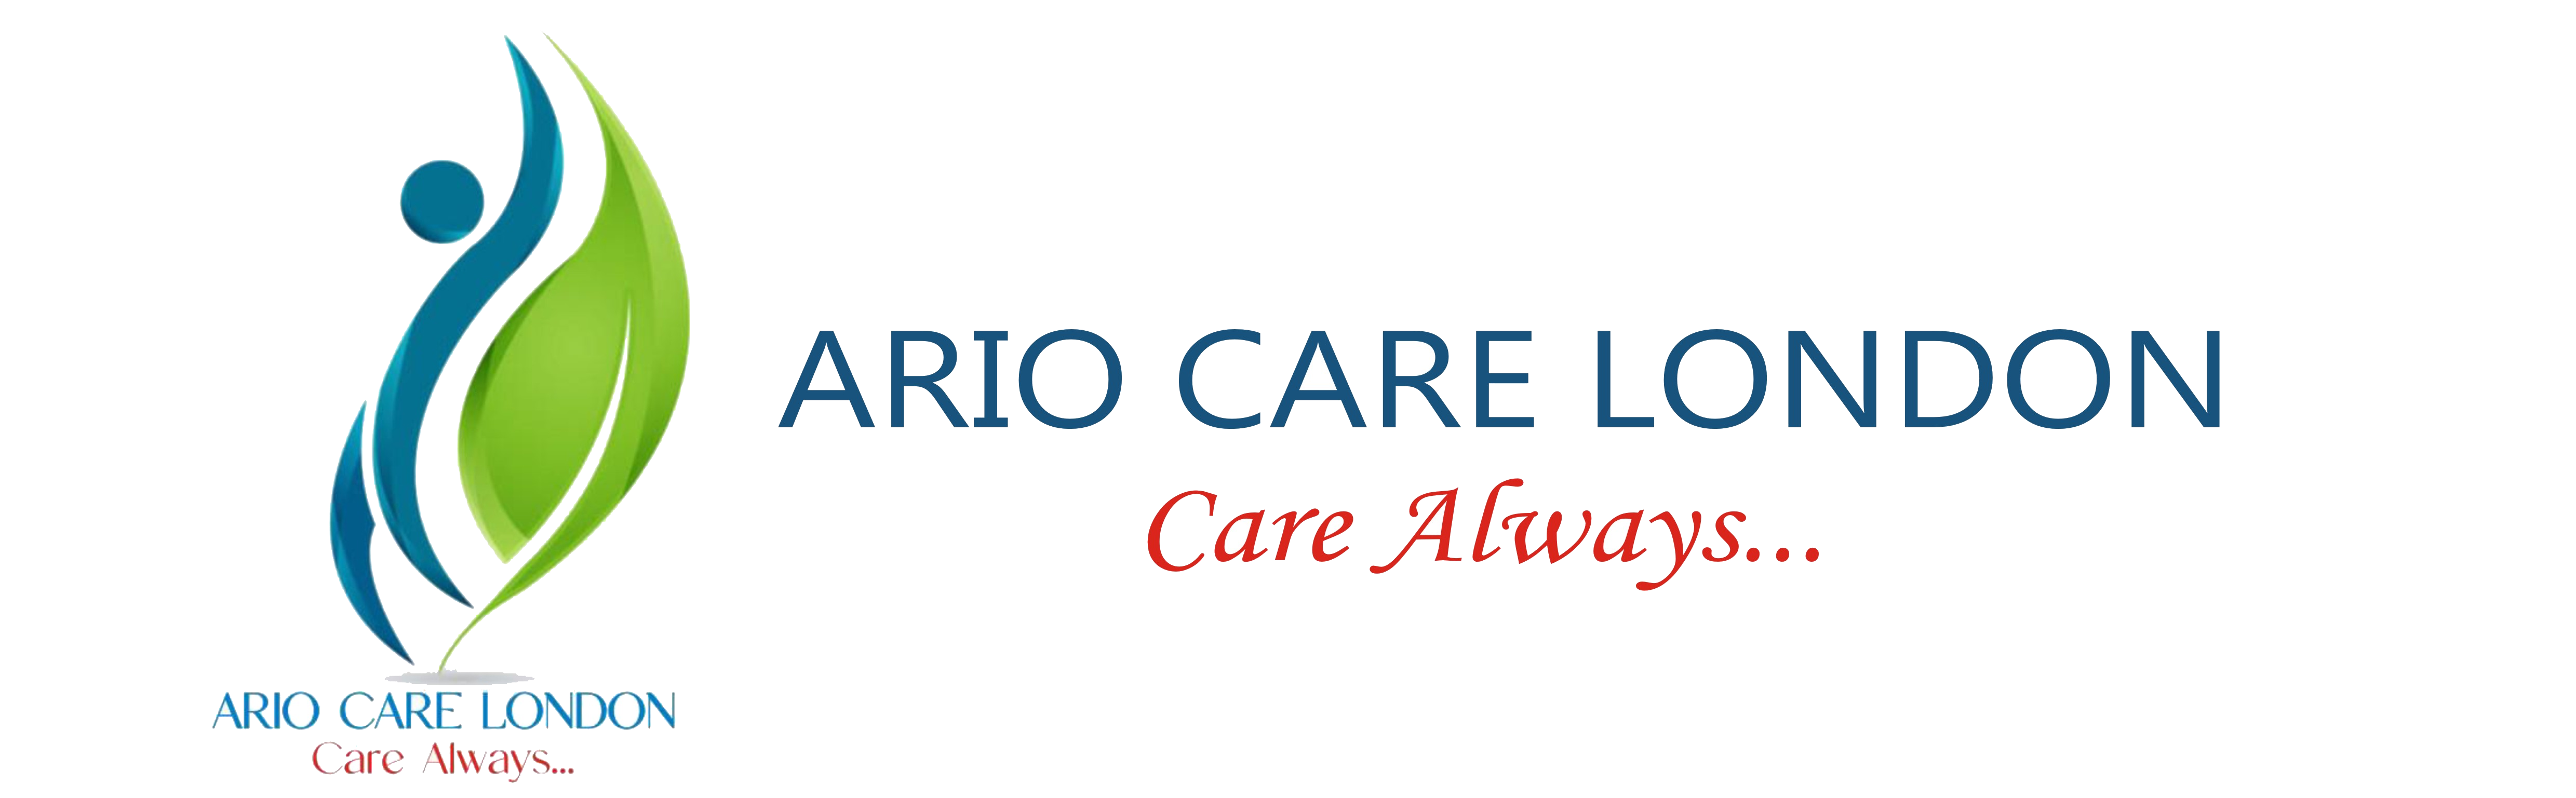 Ario Care London Logo refined